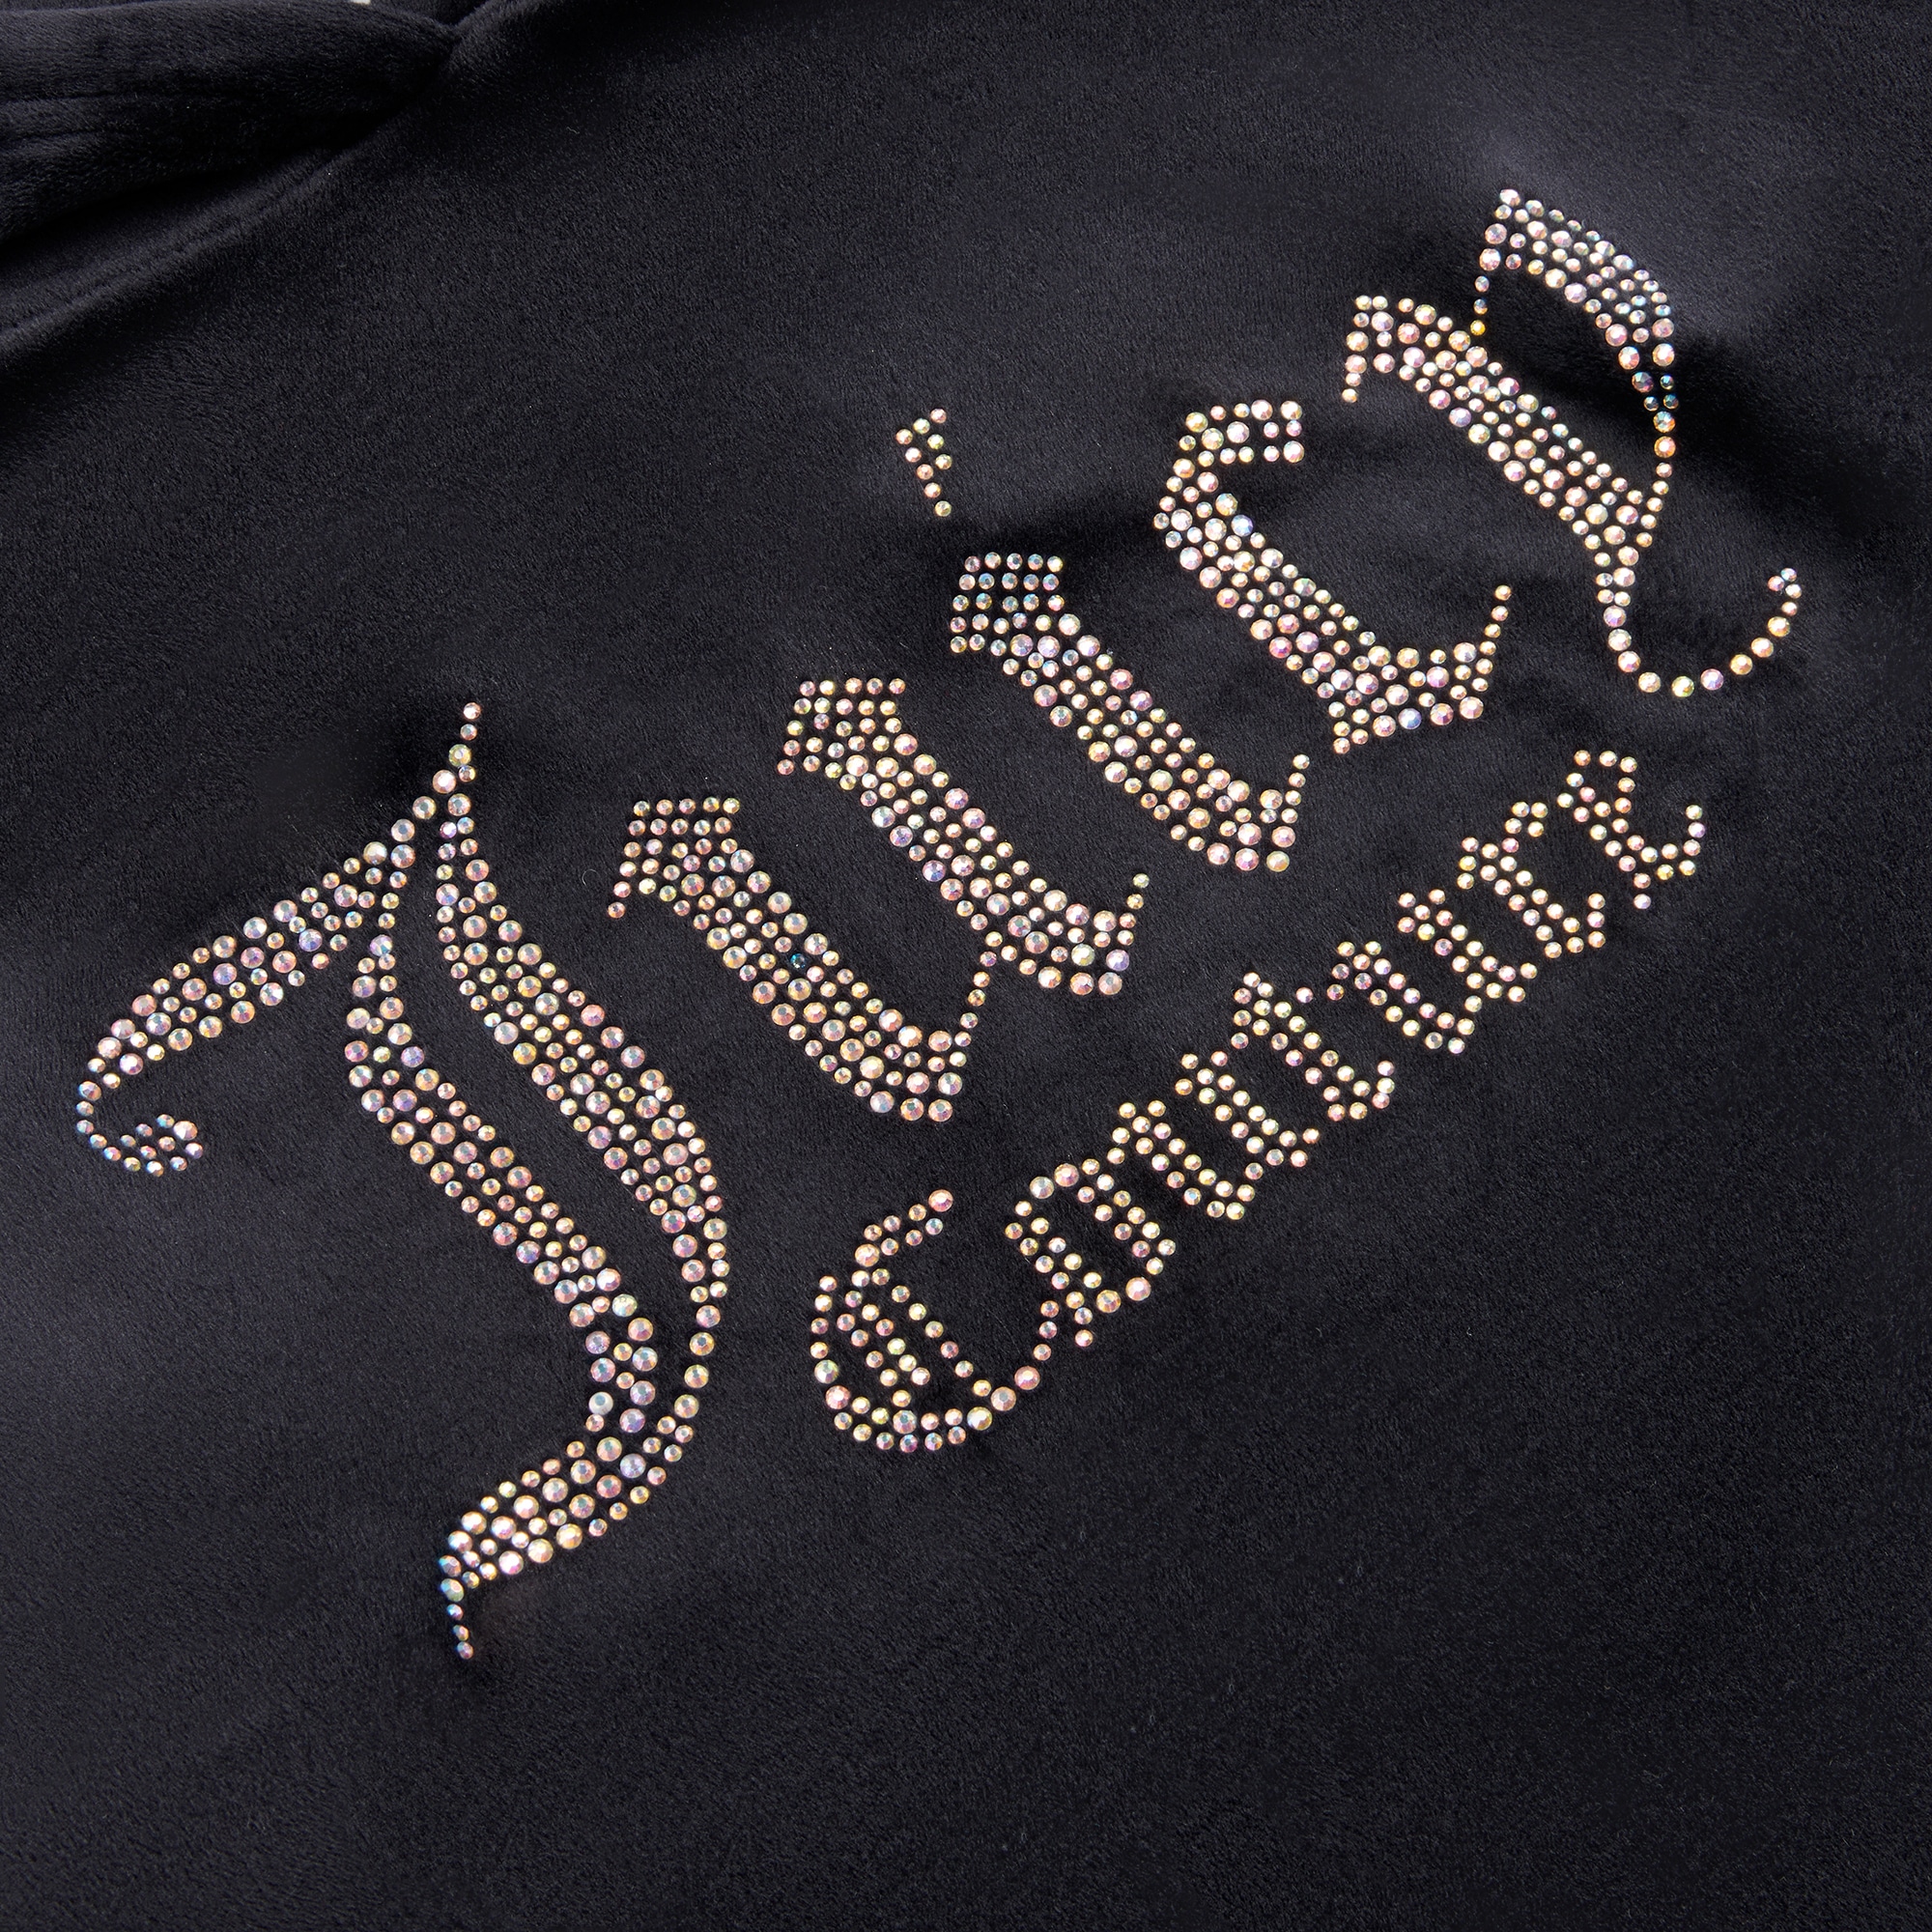 Juicy Couture diamante logo close up